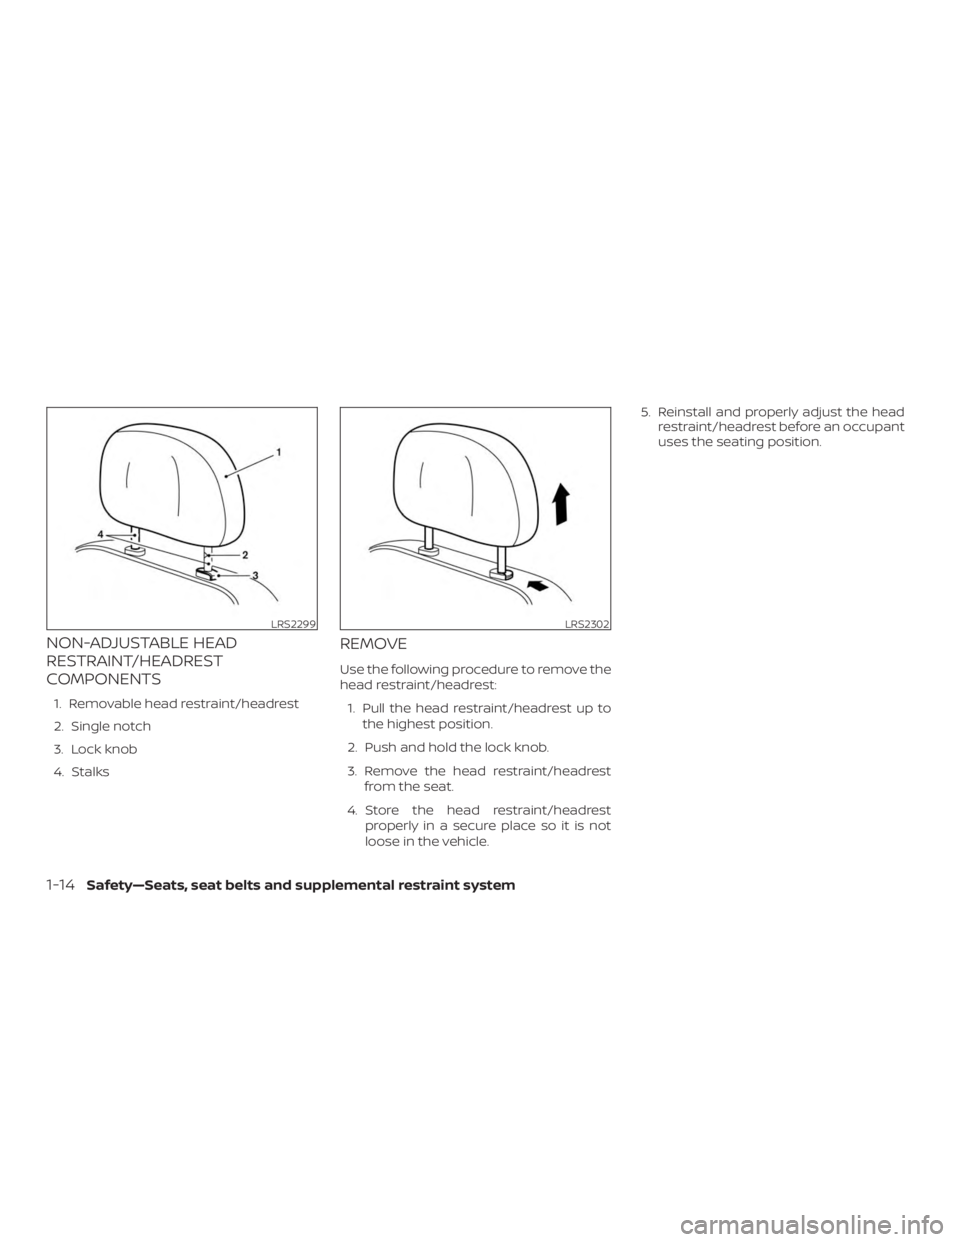 NISSAN PATHFINDER 2020  Owner´s Manual NON-ADJUSTABLE HEAD
RESTRAINT/HEADREST
COMPONENTS
1. Removable head restraint/headrest
2. Single notch
3. Lock knob
4. Stalks
REMOVE
Use the following procedure to remove the
head restraint/headrest:1